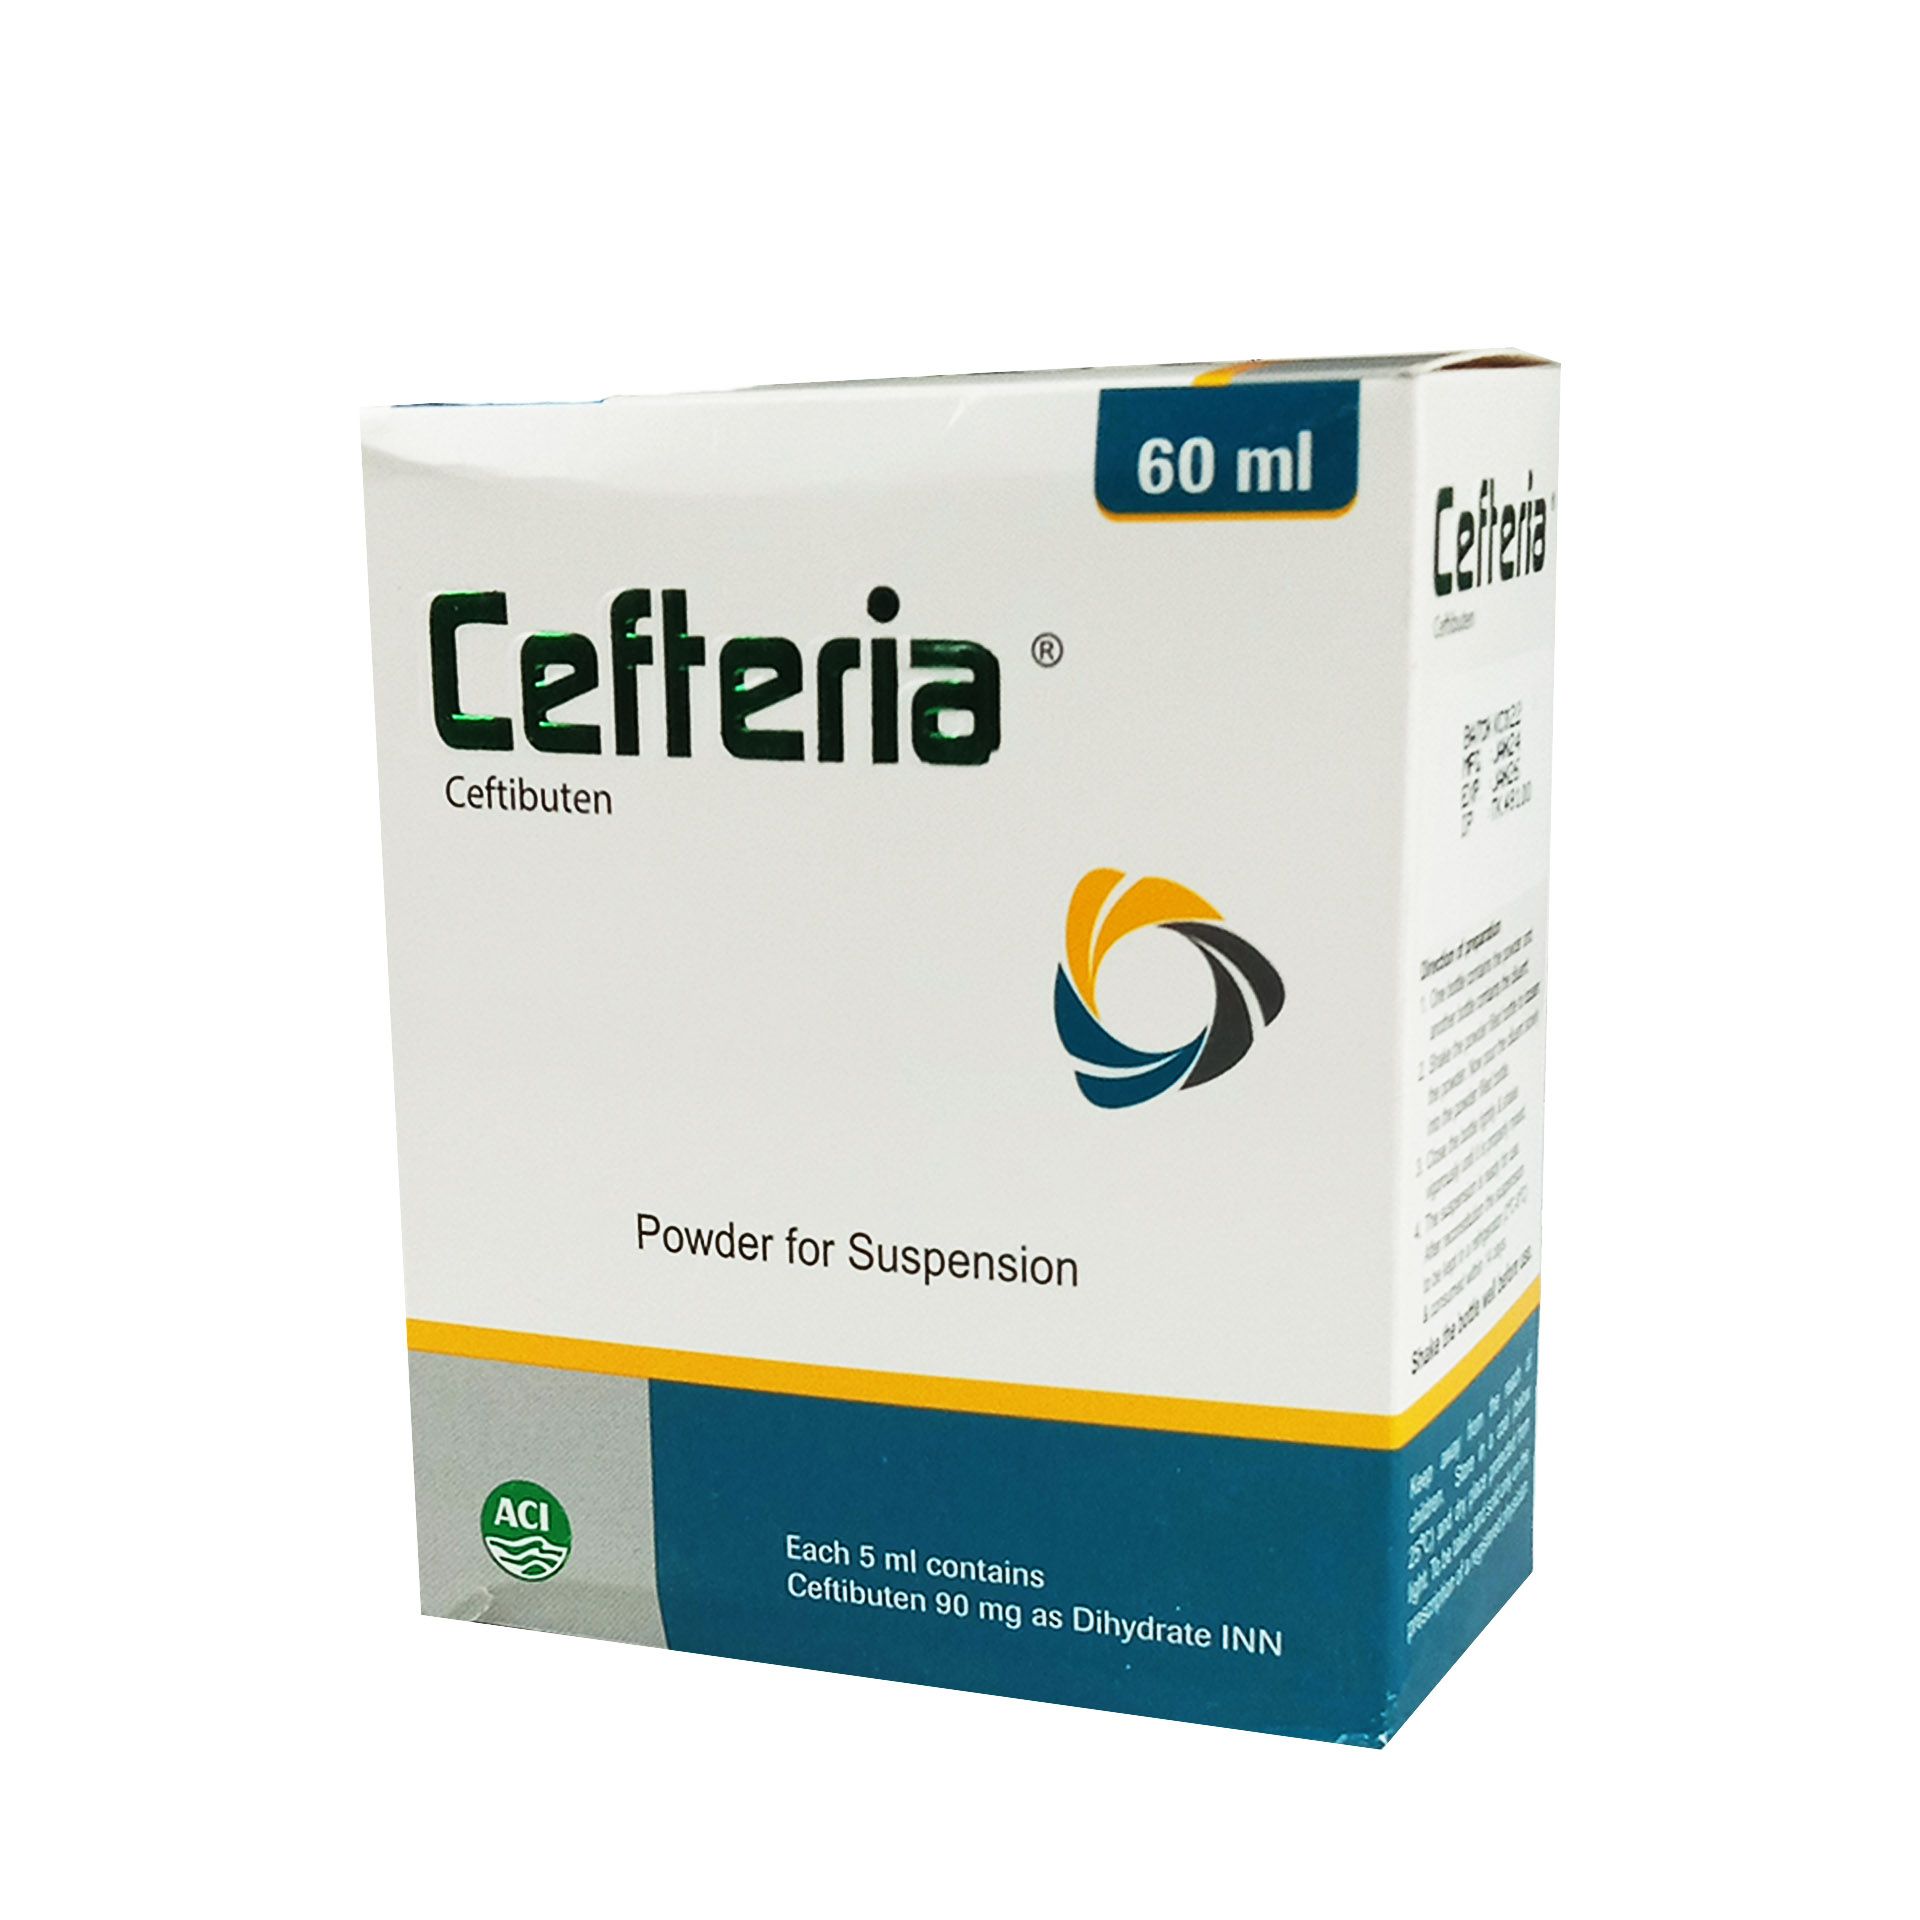 Cefteria 90mg/5ml Powder for Suspension